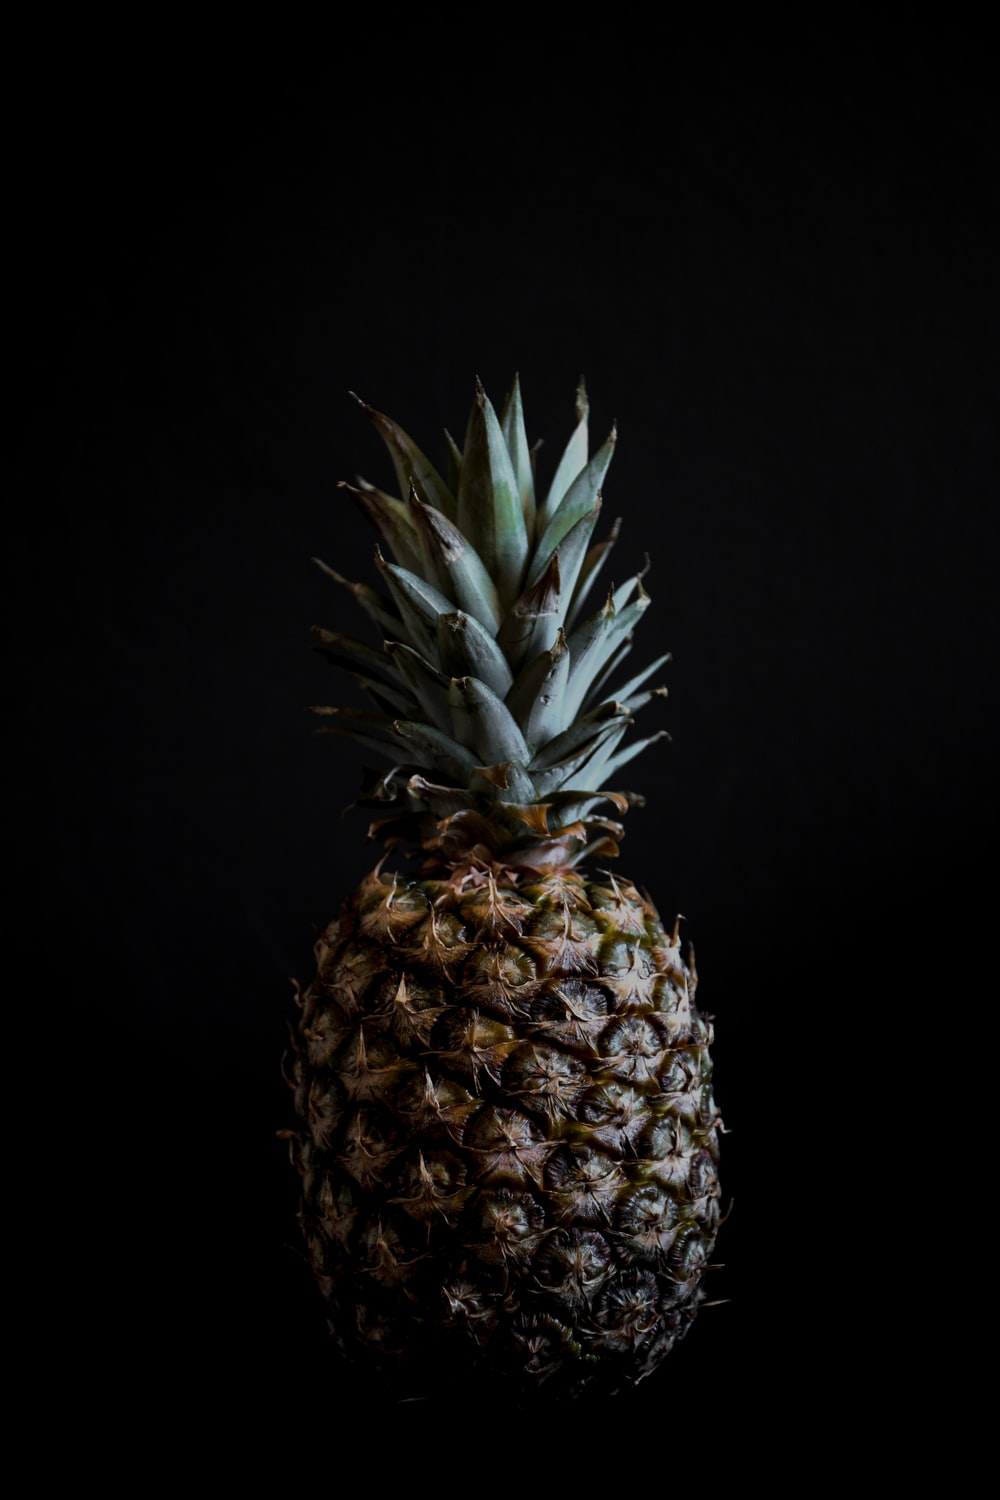 pineapple fruit photo